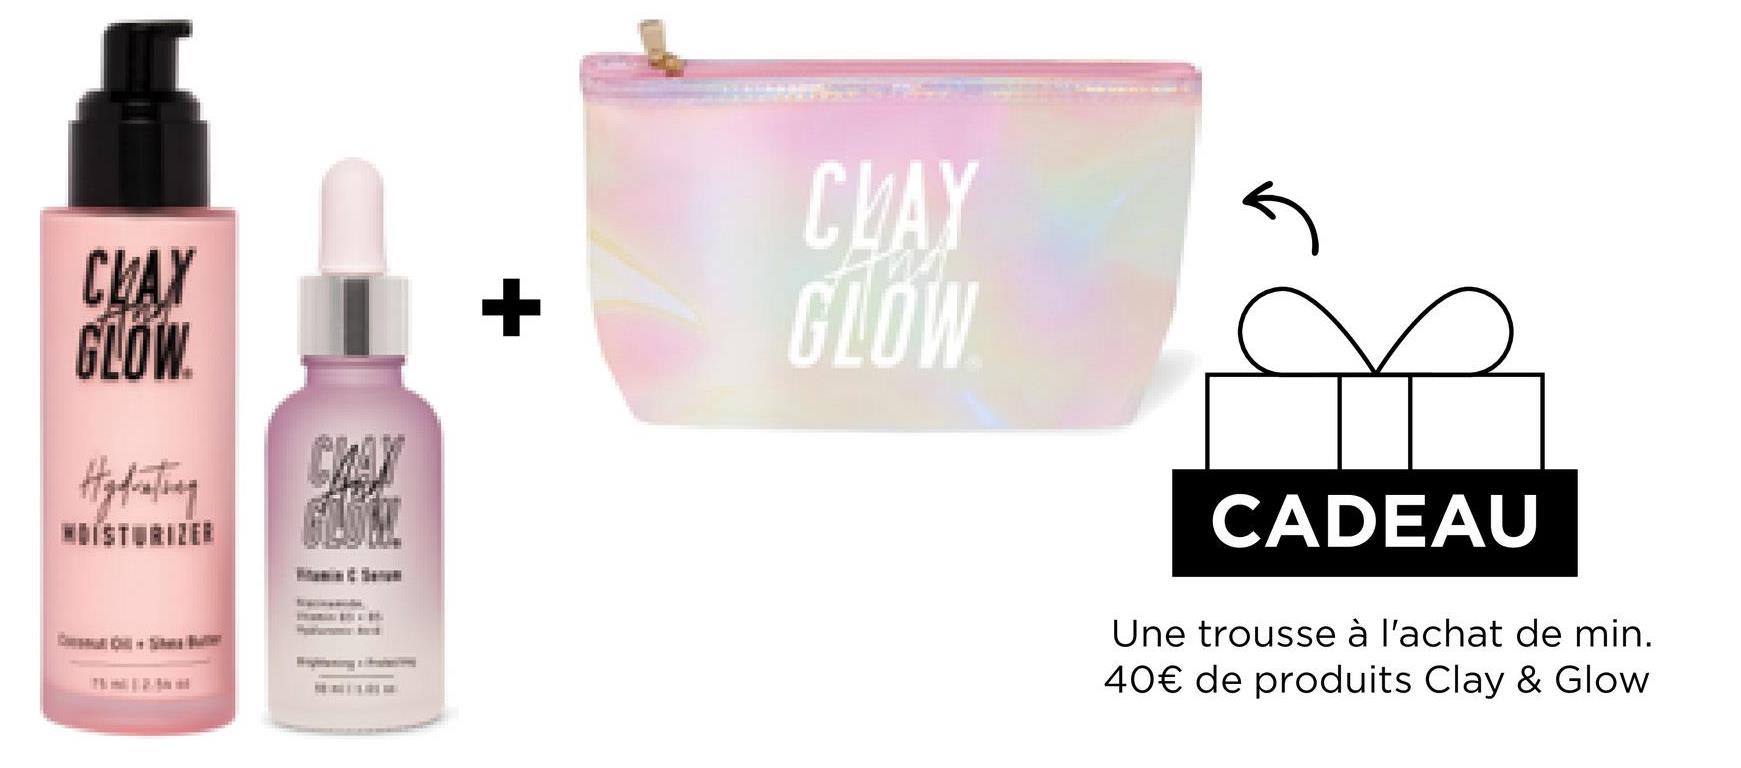 CLAY
GLOW.
104
Hydrating
GLOM
14/01
+
CLAY
GLOW
CADEAU
Une trousse à l'achat de min.
40€ de produits Clay & Glow